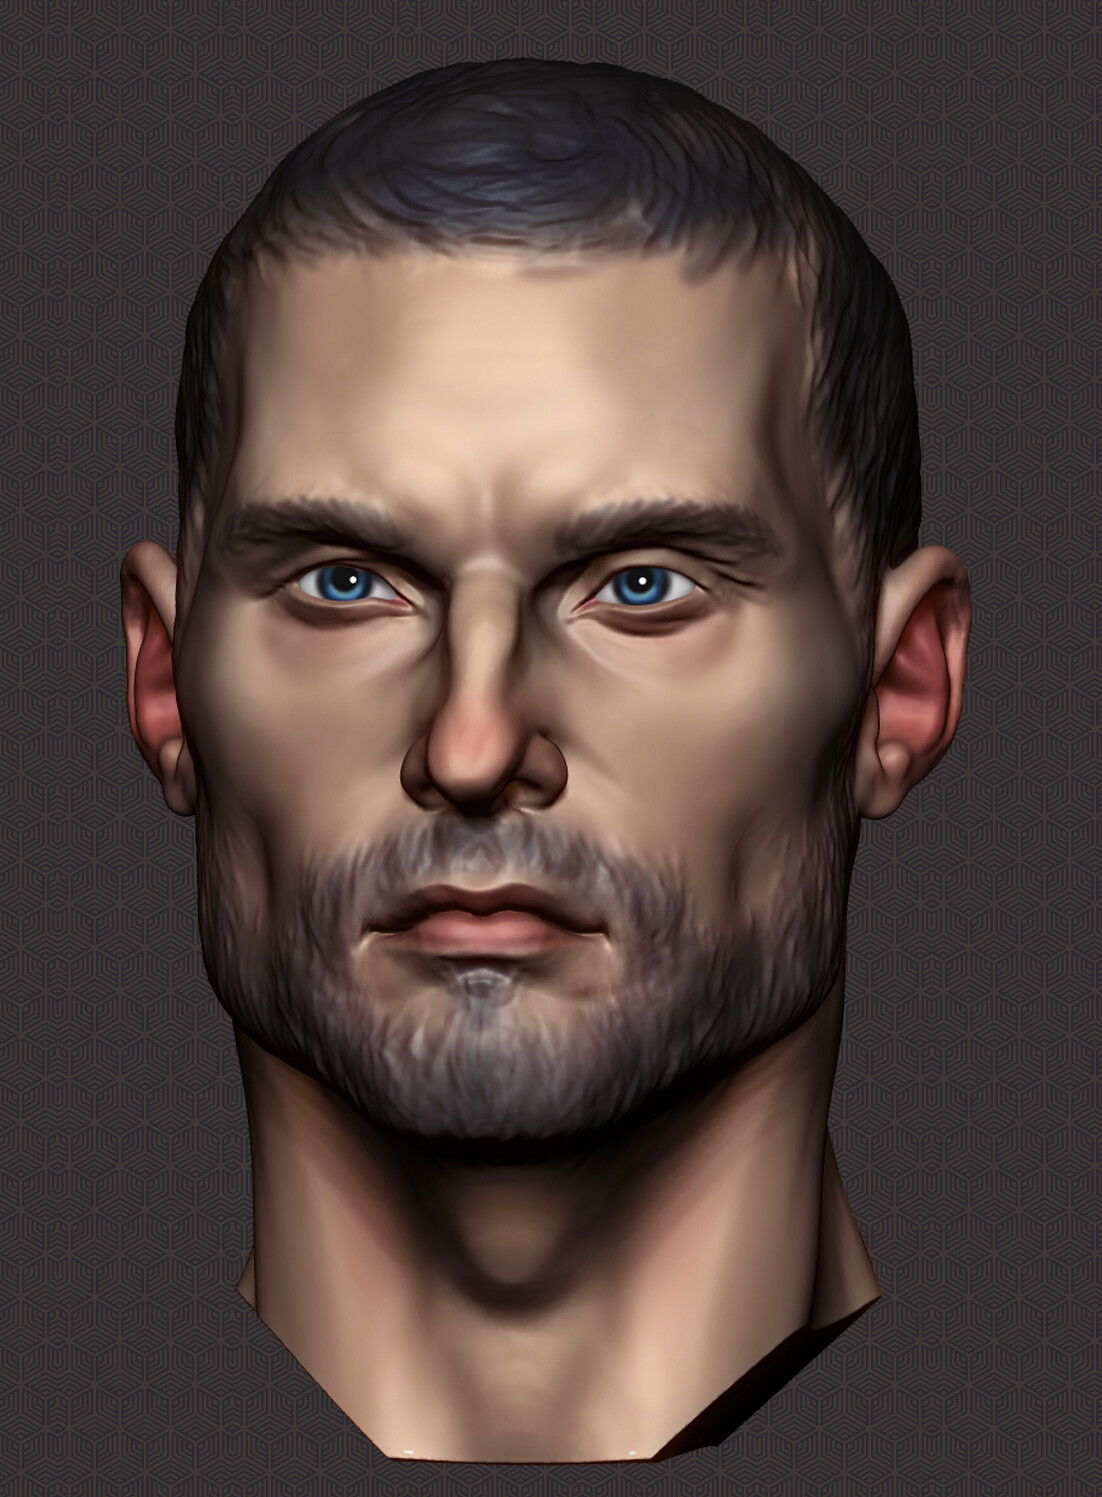 ArtStation - Male character face sculpt | Resources